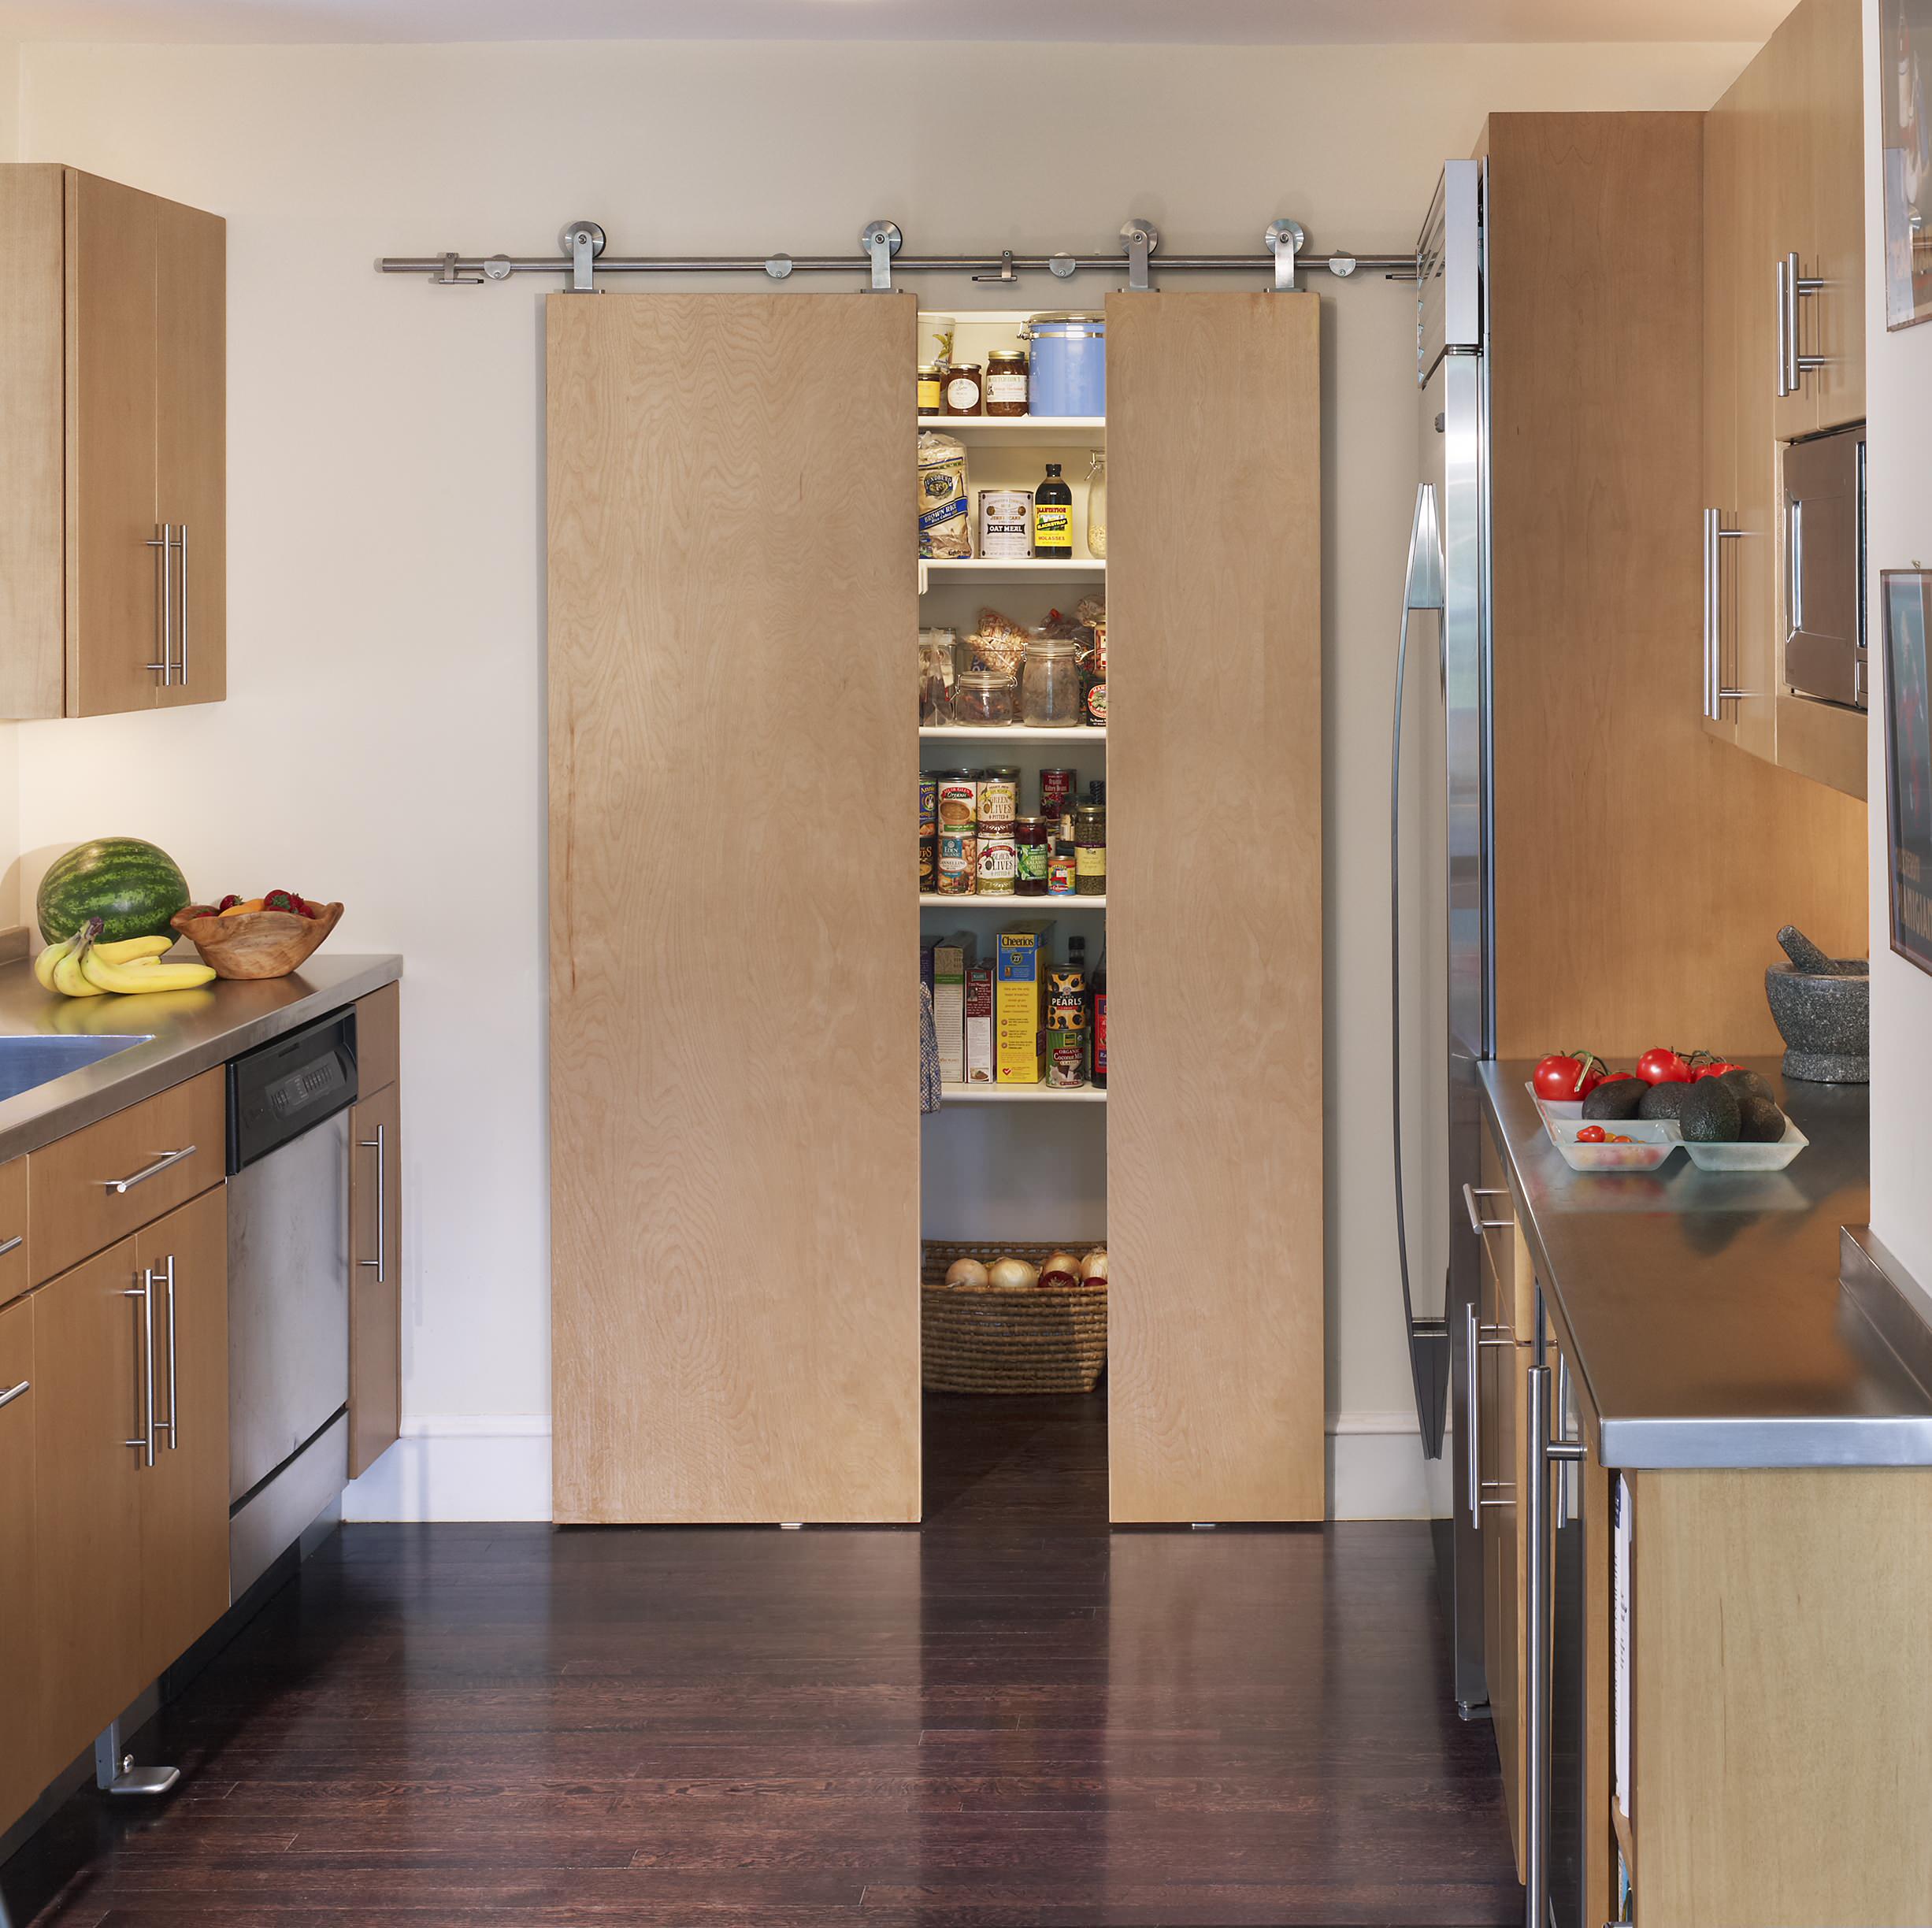 Sliding Door Pantry Houzz, Kitchen Pantry Cabinet With Sliding Doors